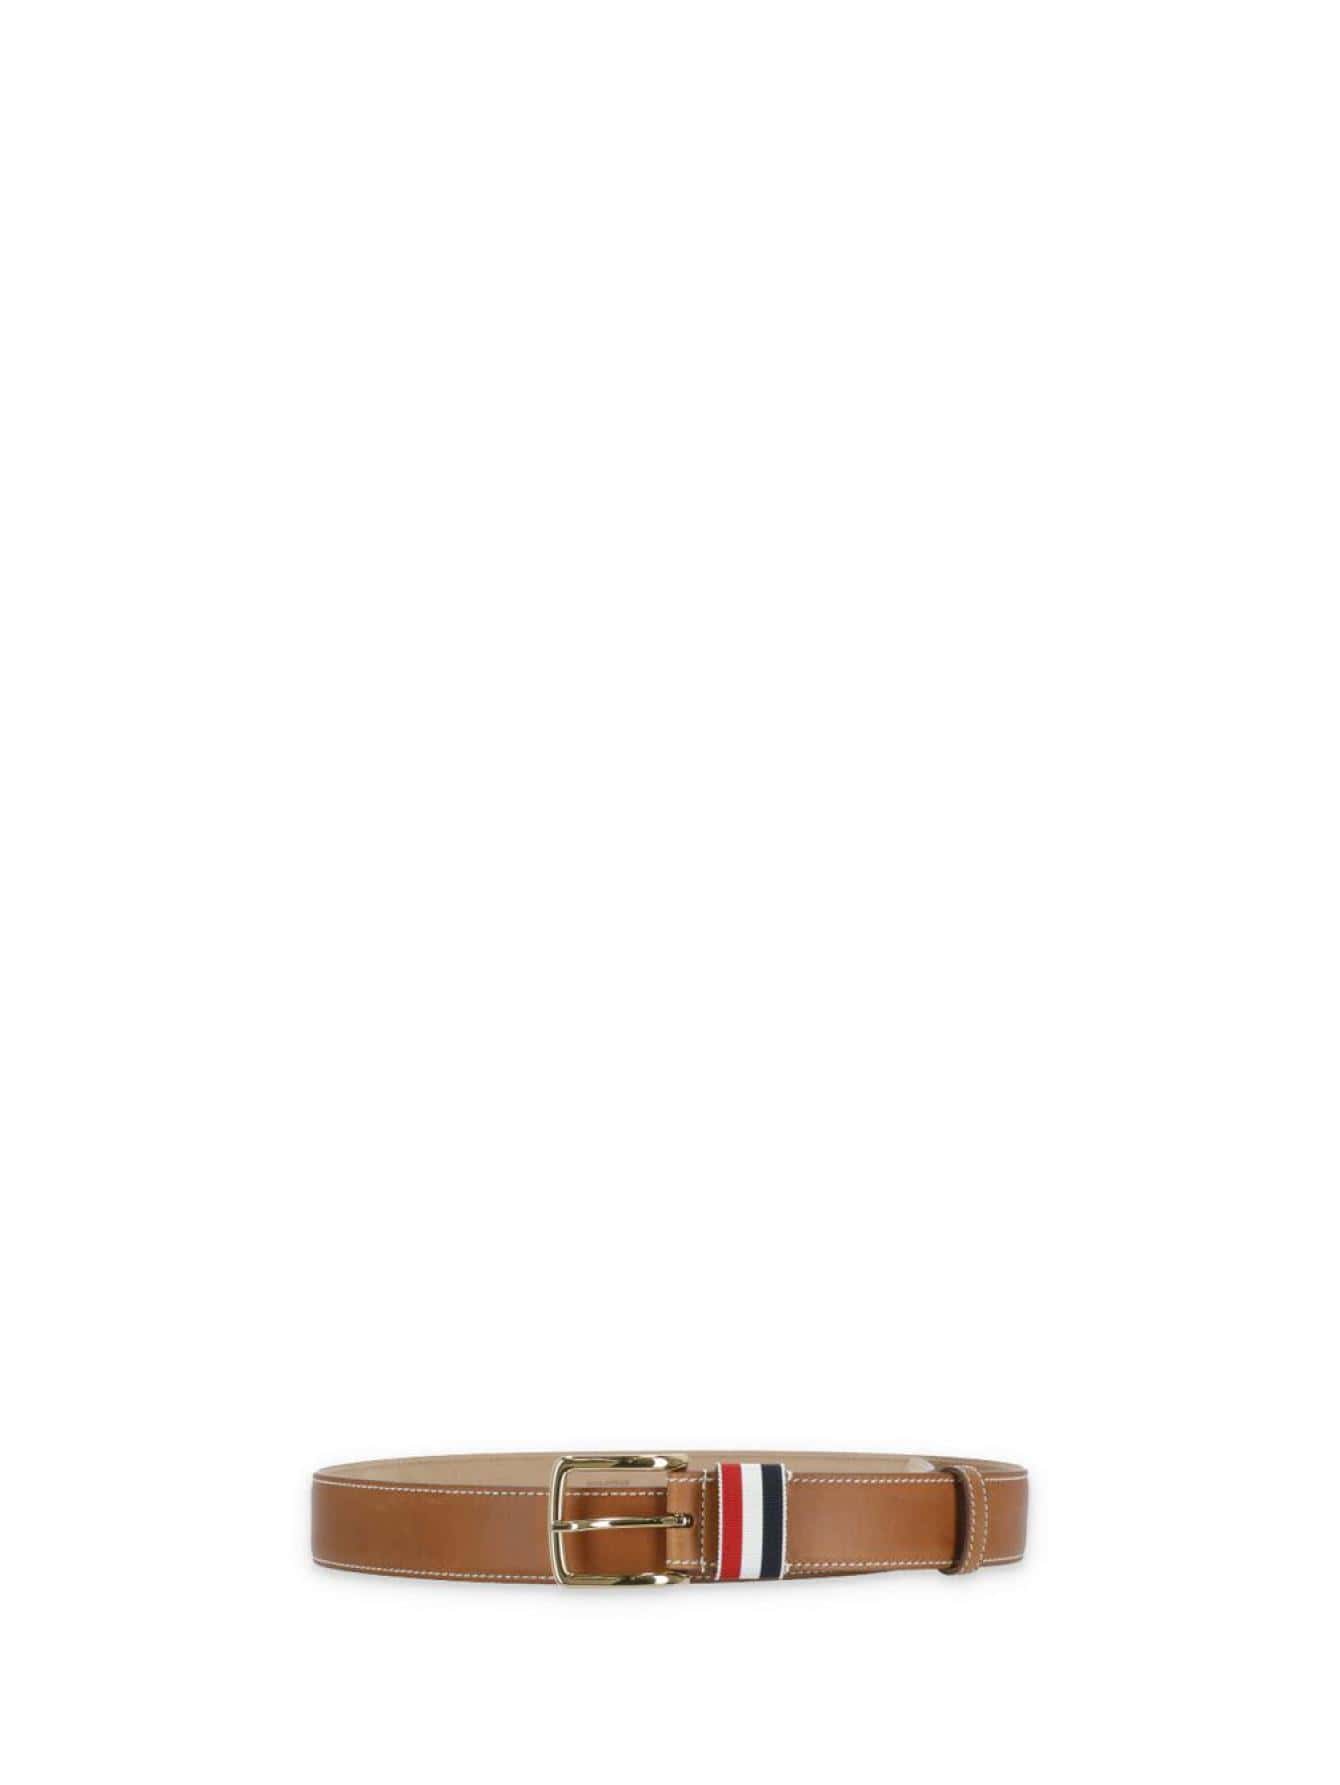 Ремень мужской Thom Browne BROWN MCX039AL0044255, коричневый no onepaul brand fashion automatic buckle black genuine leather belt men s belts cow leather belts for men 3 5cm width wqe789